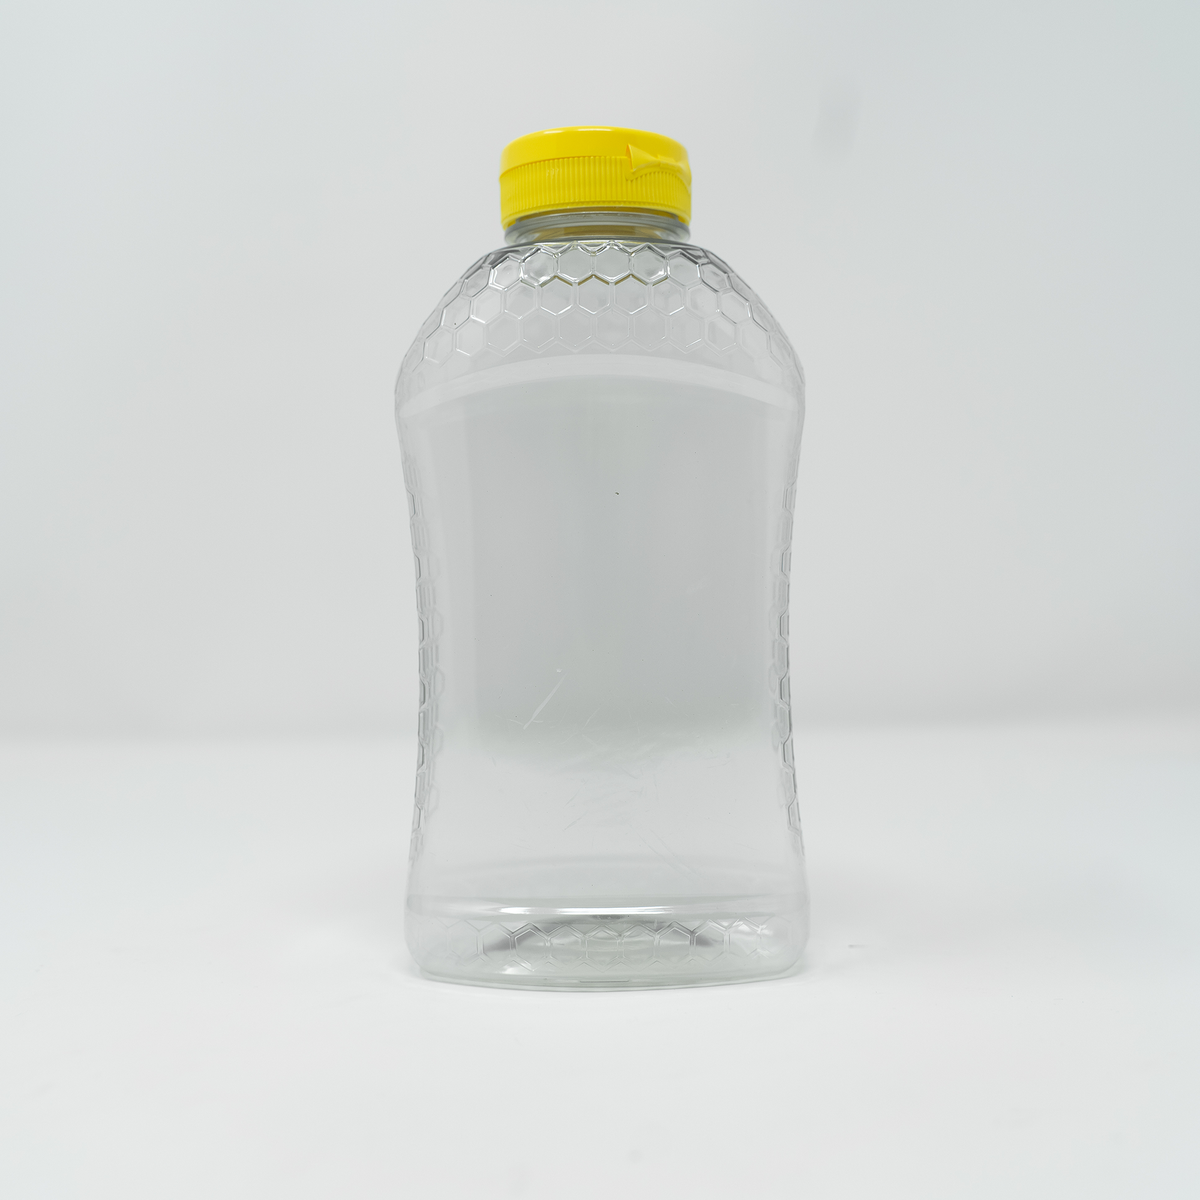 24 oz Honeycomb Bottles - 12 Pack